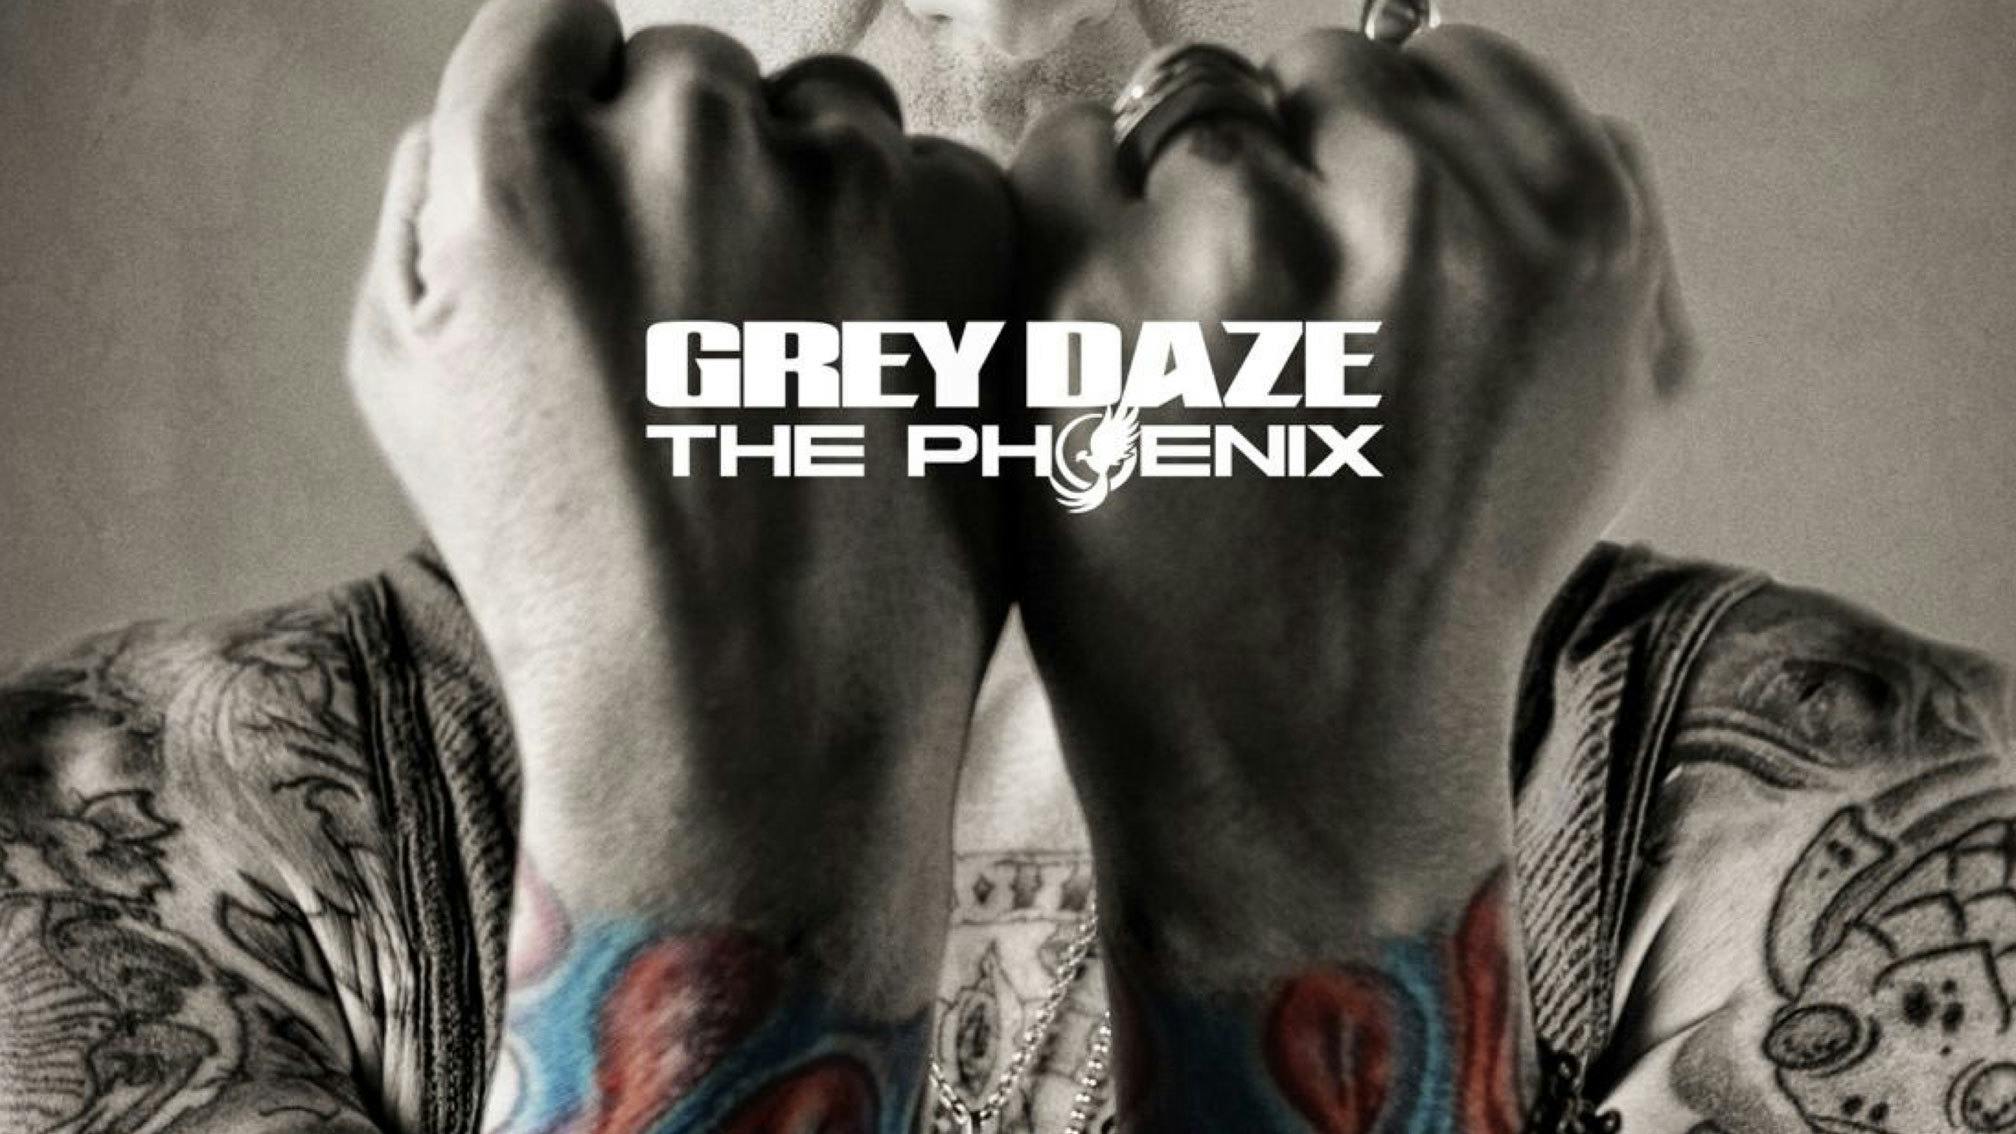 Grey Daze announce new album The Phoenix: a “celebration” of Chester Bennington